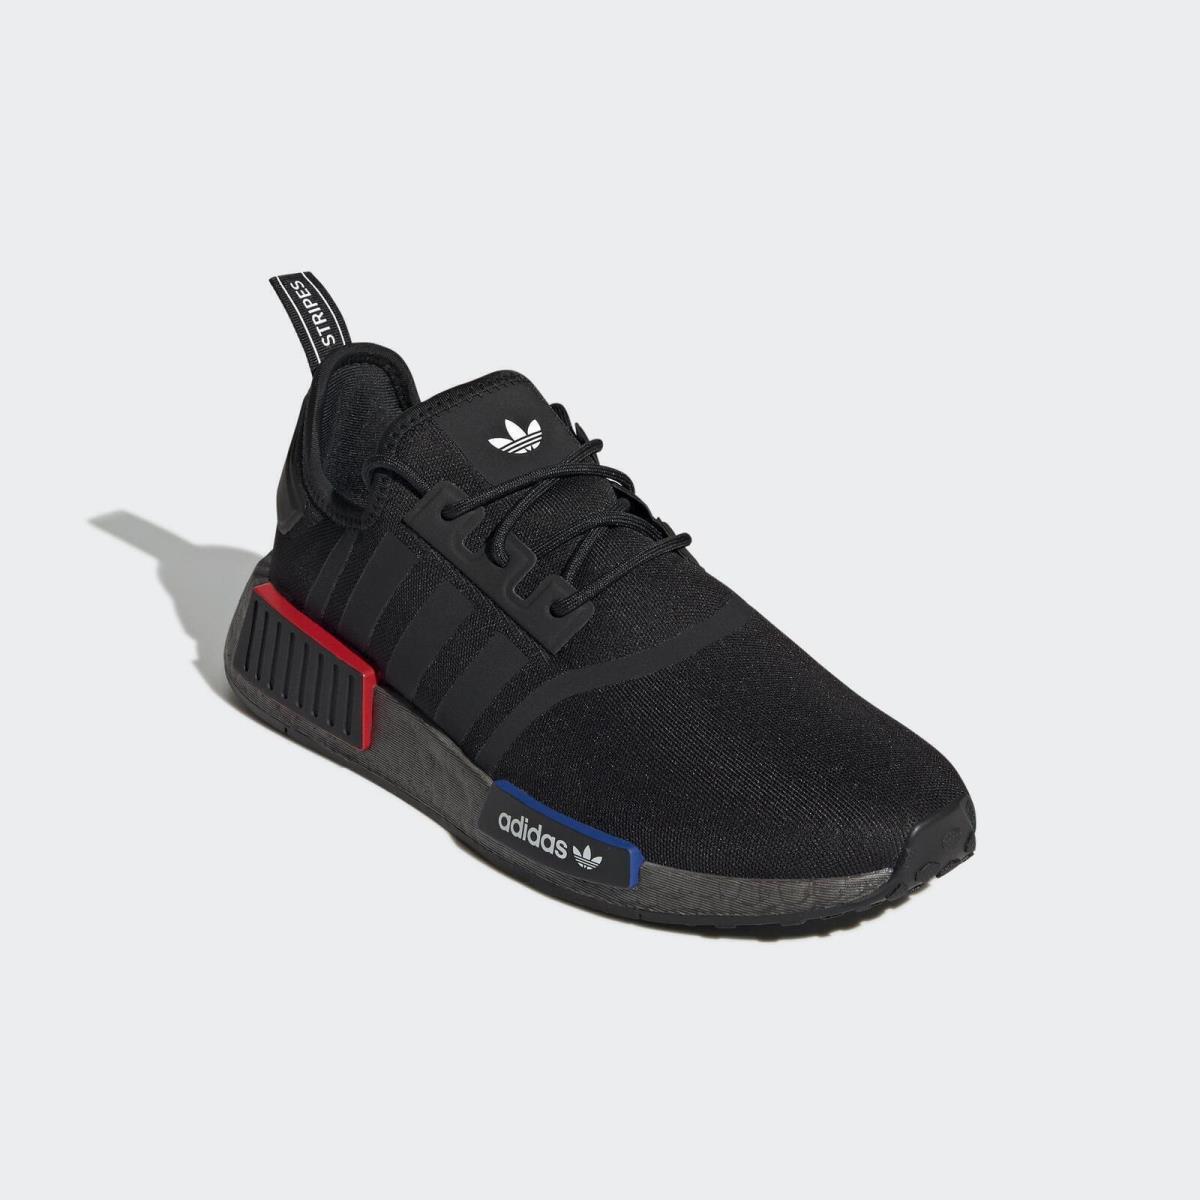 Adidas shoes NMD - Black/Grey 2